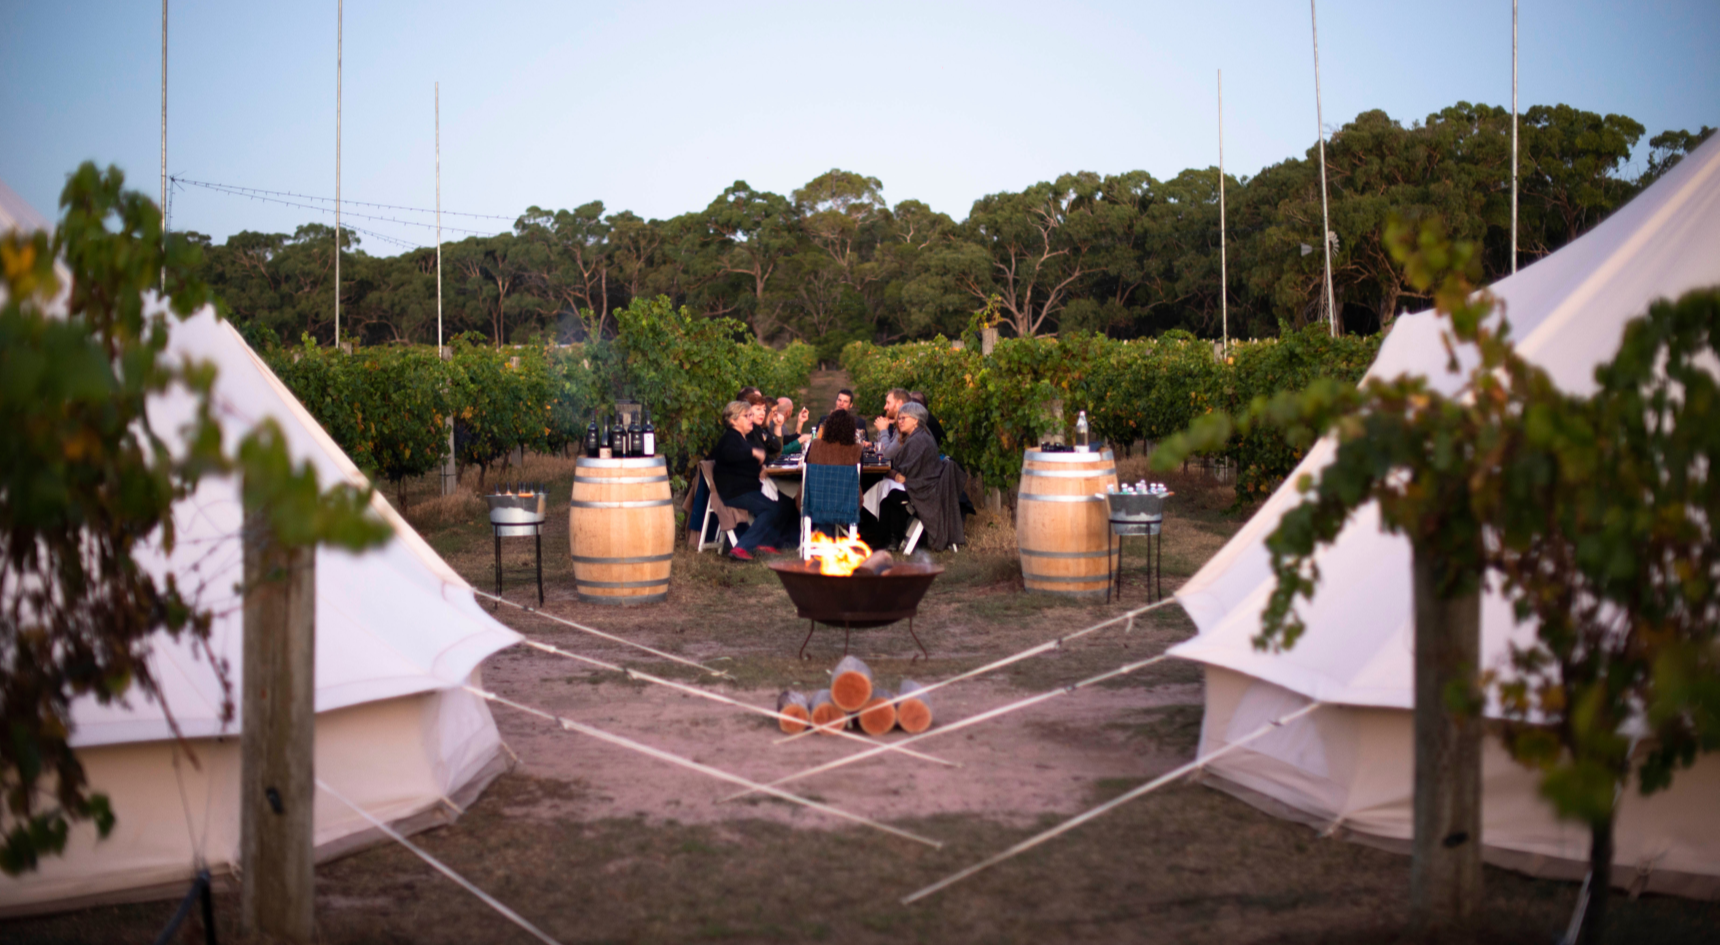 Wine and dine under the stars at Raidis in Coonawarra. Image: SATC/Ockert Le Roux 